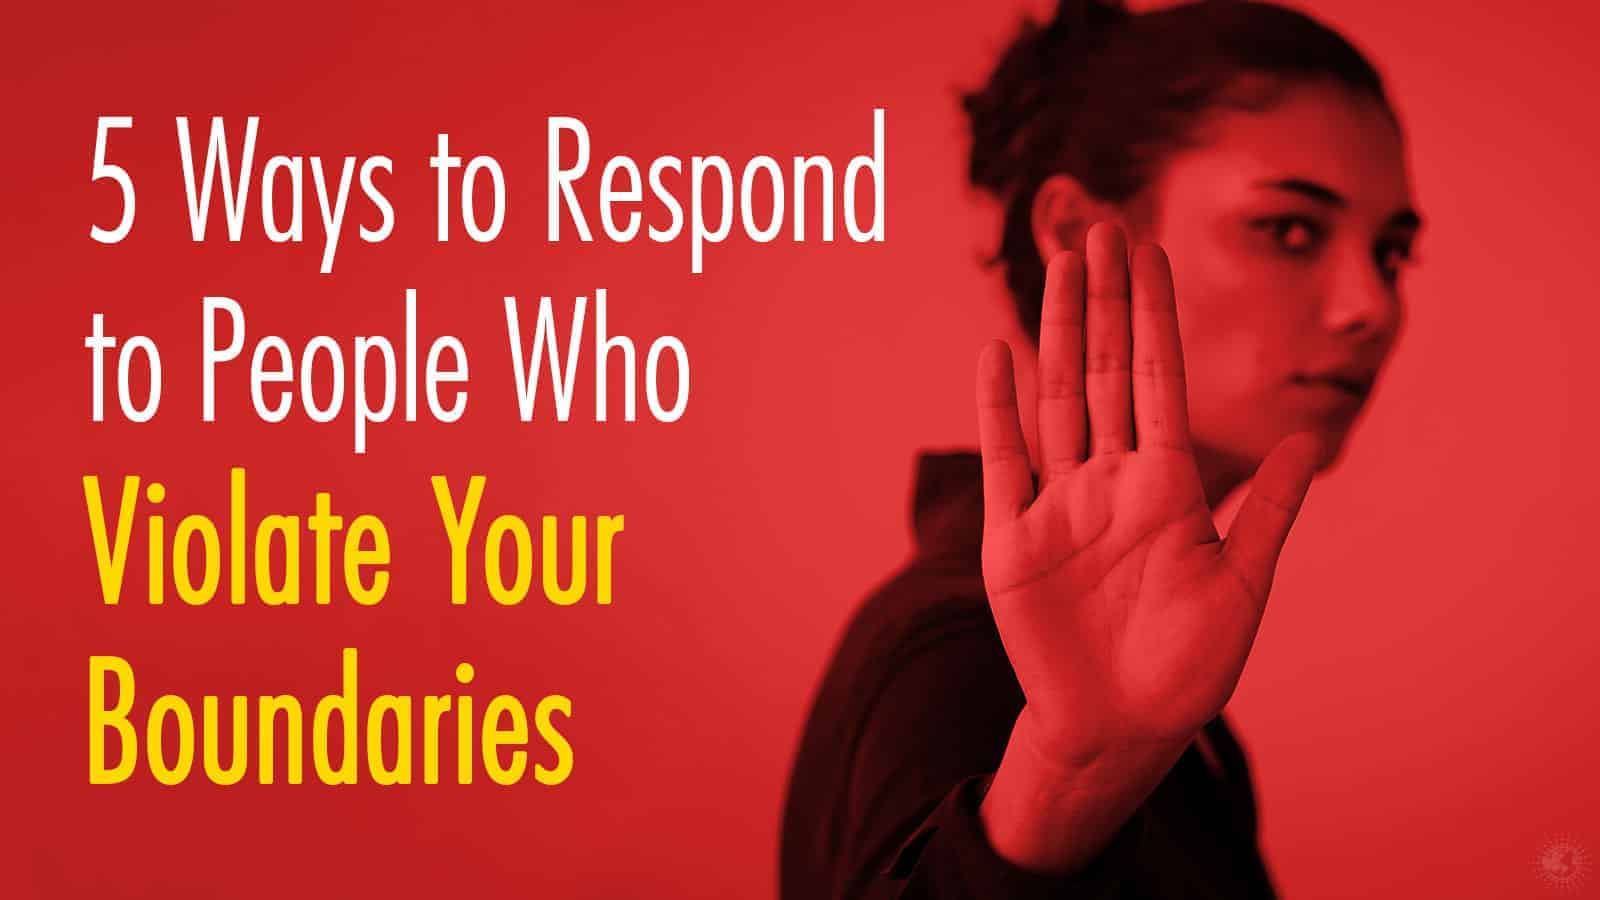 5 Ways to Respond to People Who Violate Your Boundaries